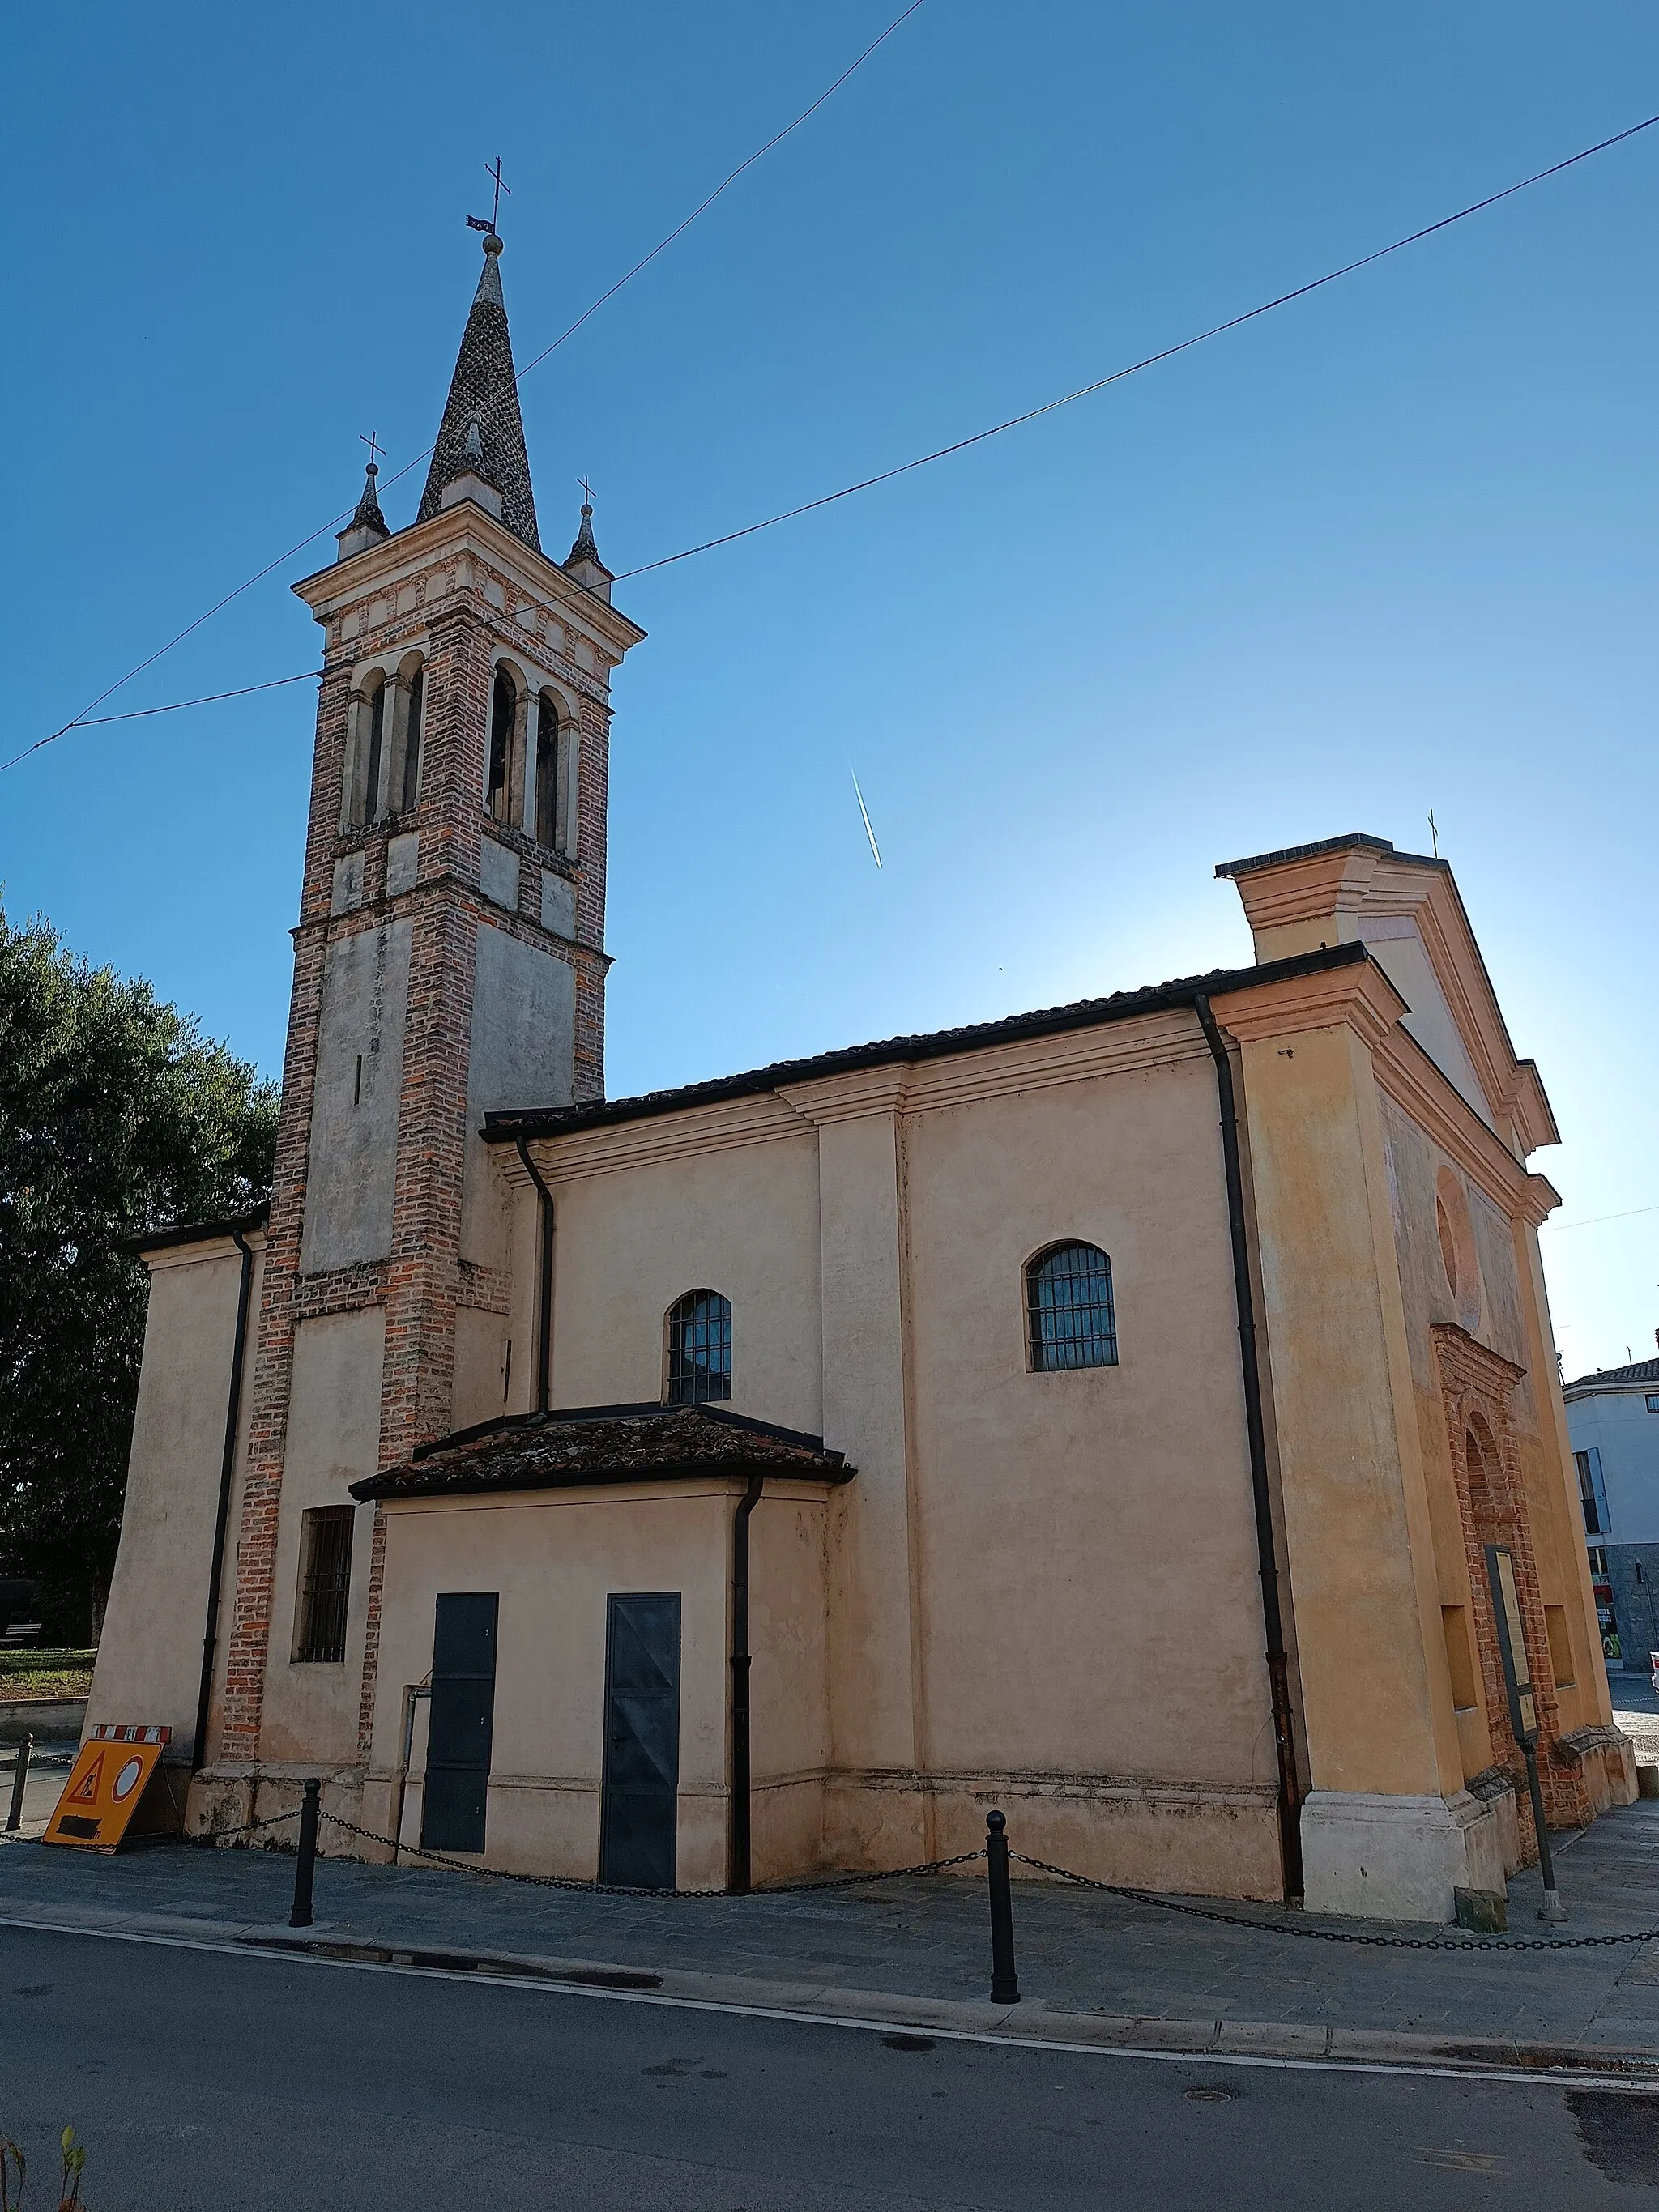 Image of Sergnano